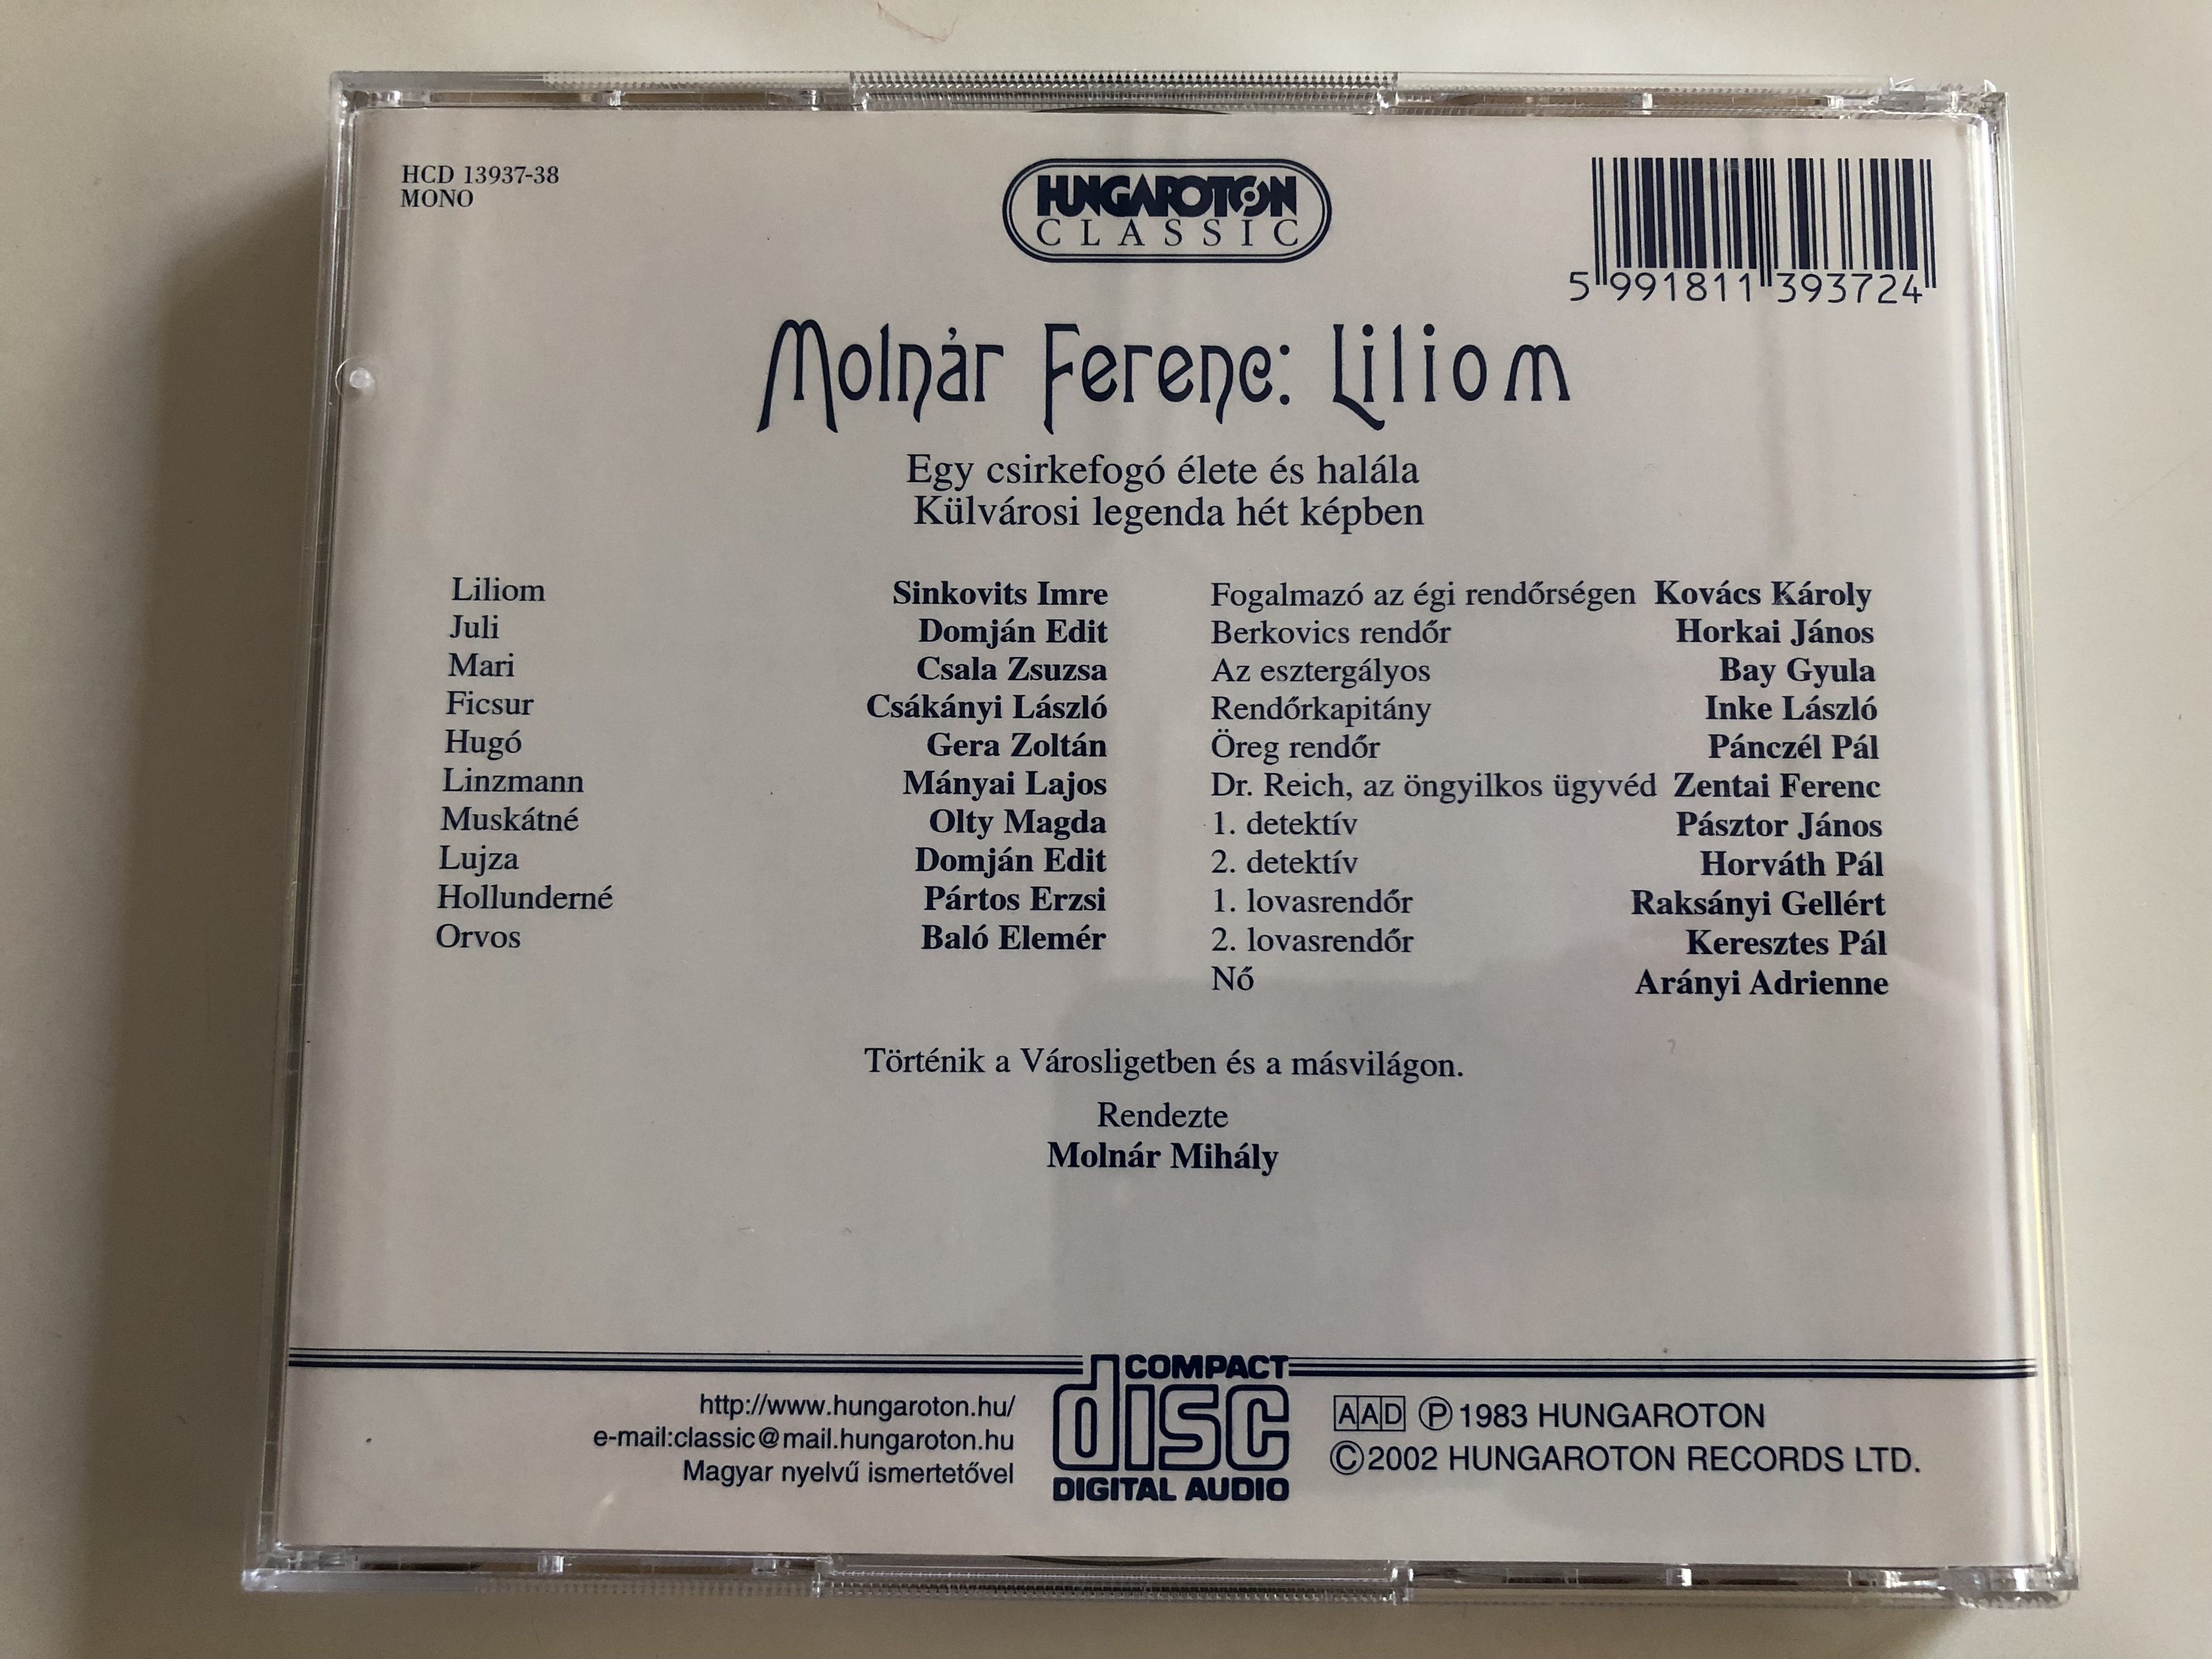 moln-r-ferenc-liliom-domj-n-edit-sinkovits-imre-hungaroton-classic-audio-cd-2002-hcd-13937-38-2cd-9-.jpg